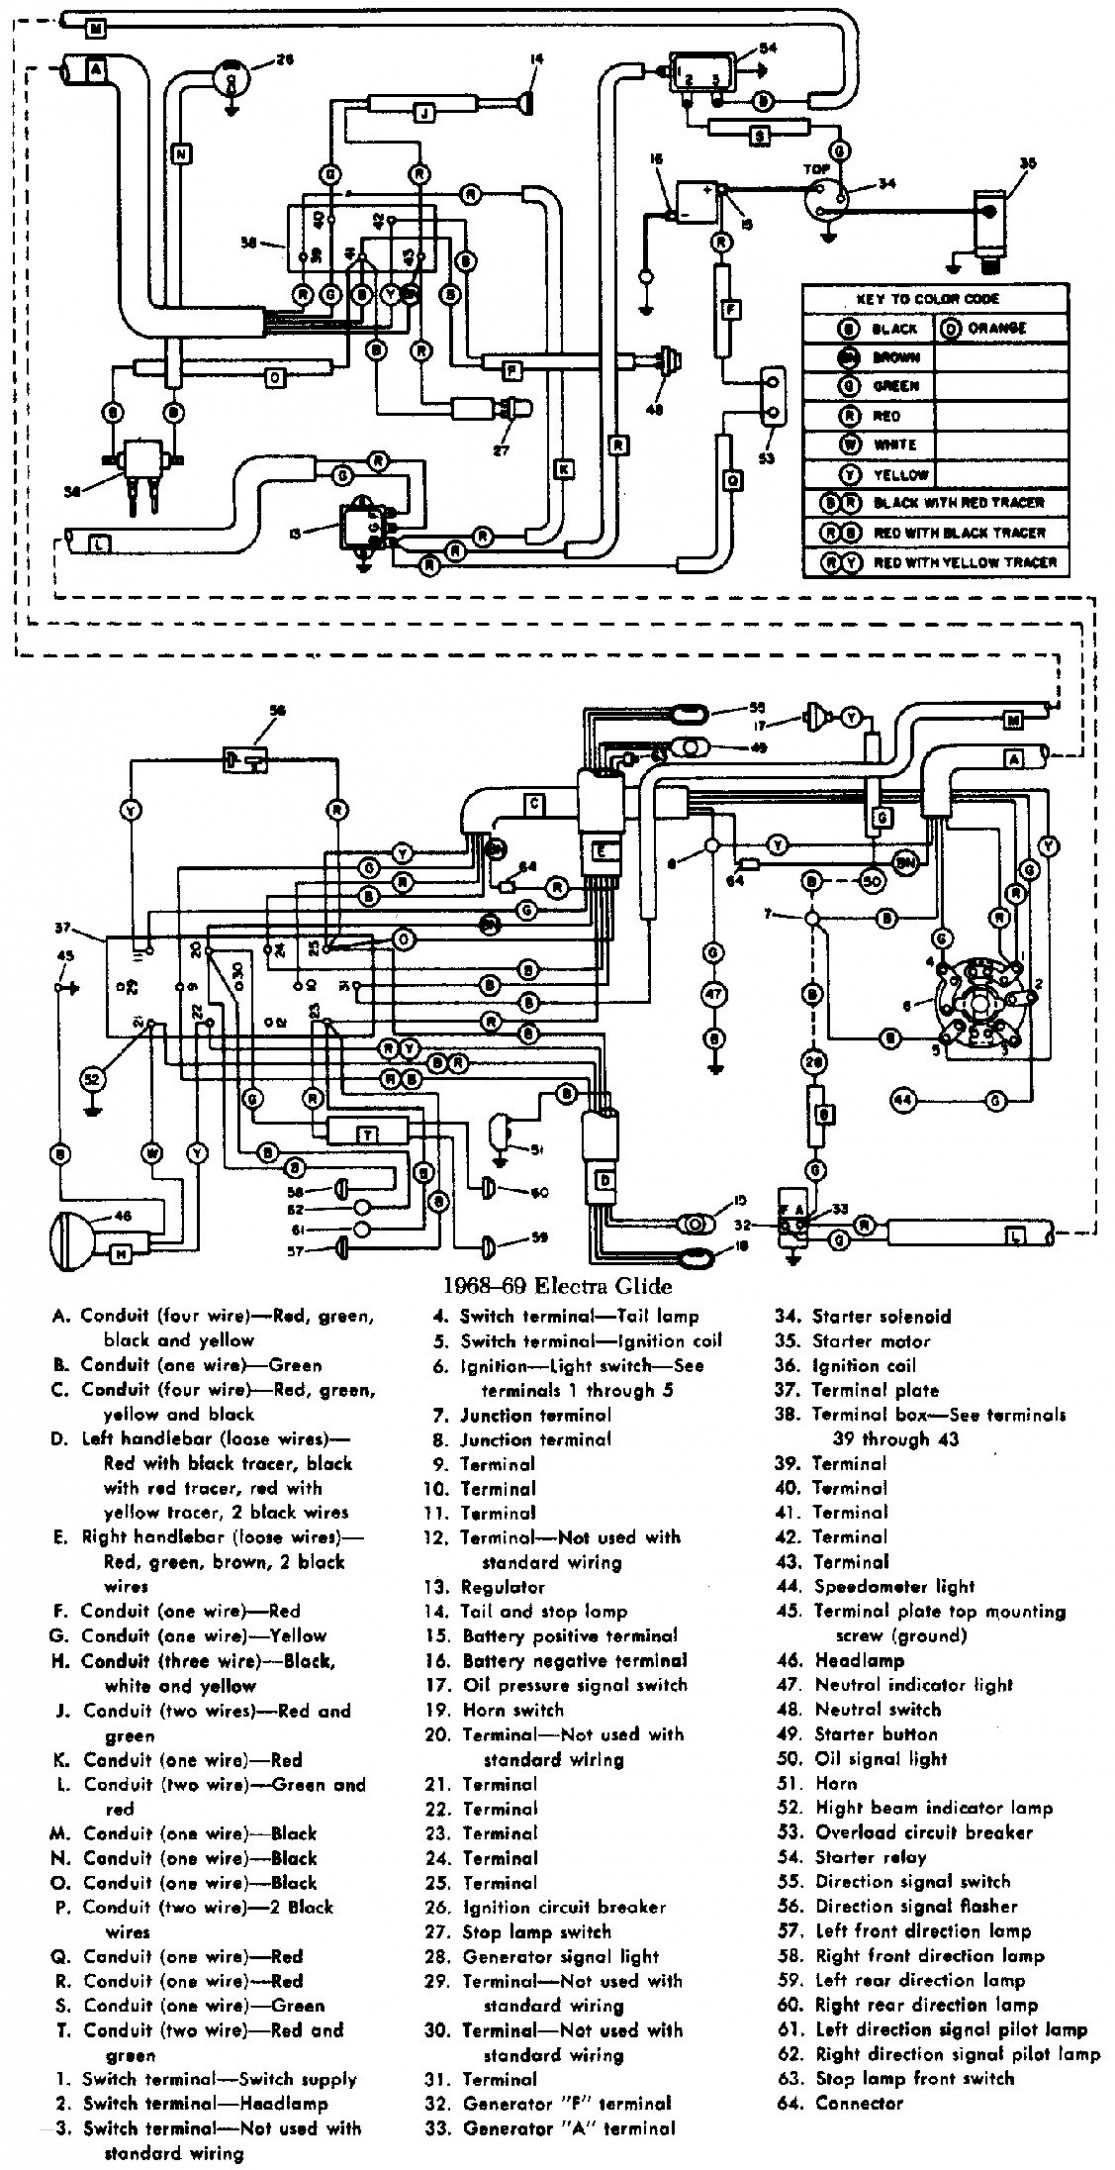 Shovel Head Harley Engine Diagram Diagram] Harley Davidson Electronic Ignition Wiring Diagram Of Shovel Head Harley Engine Diagram